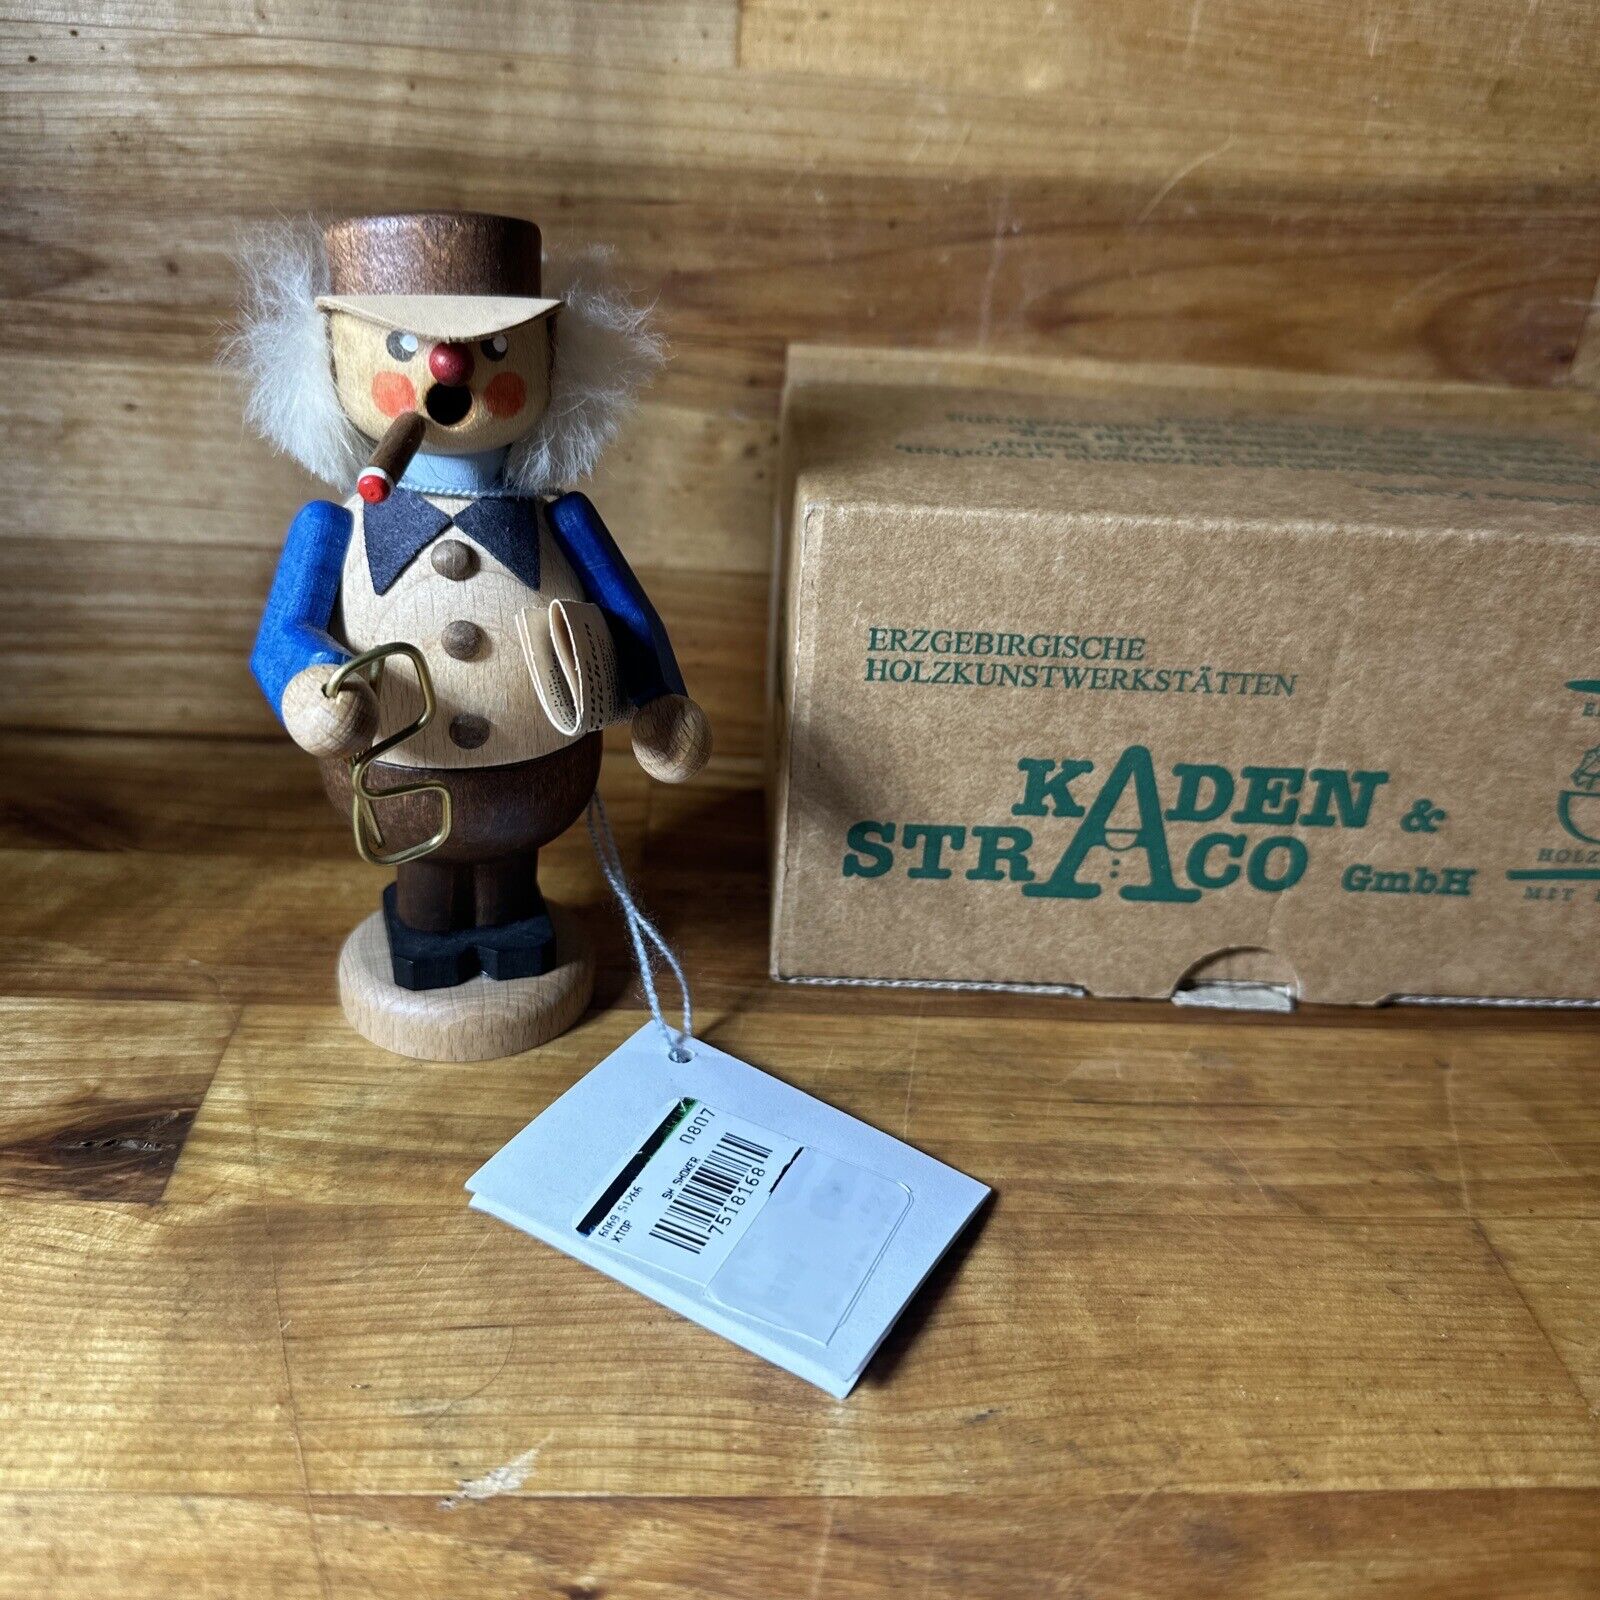 Vintage Erzgebirgische Kaden Straco Grandpa Incense Smoker W/ Box 7518168